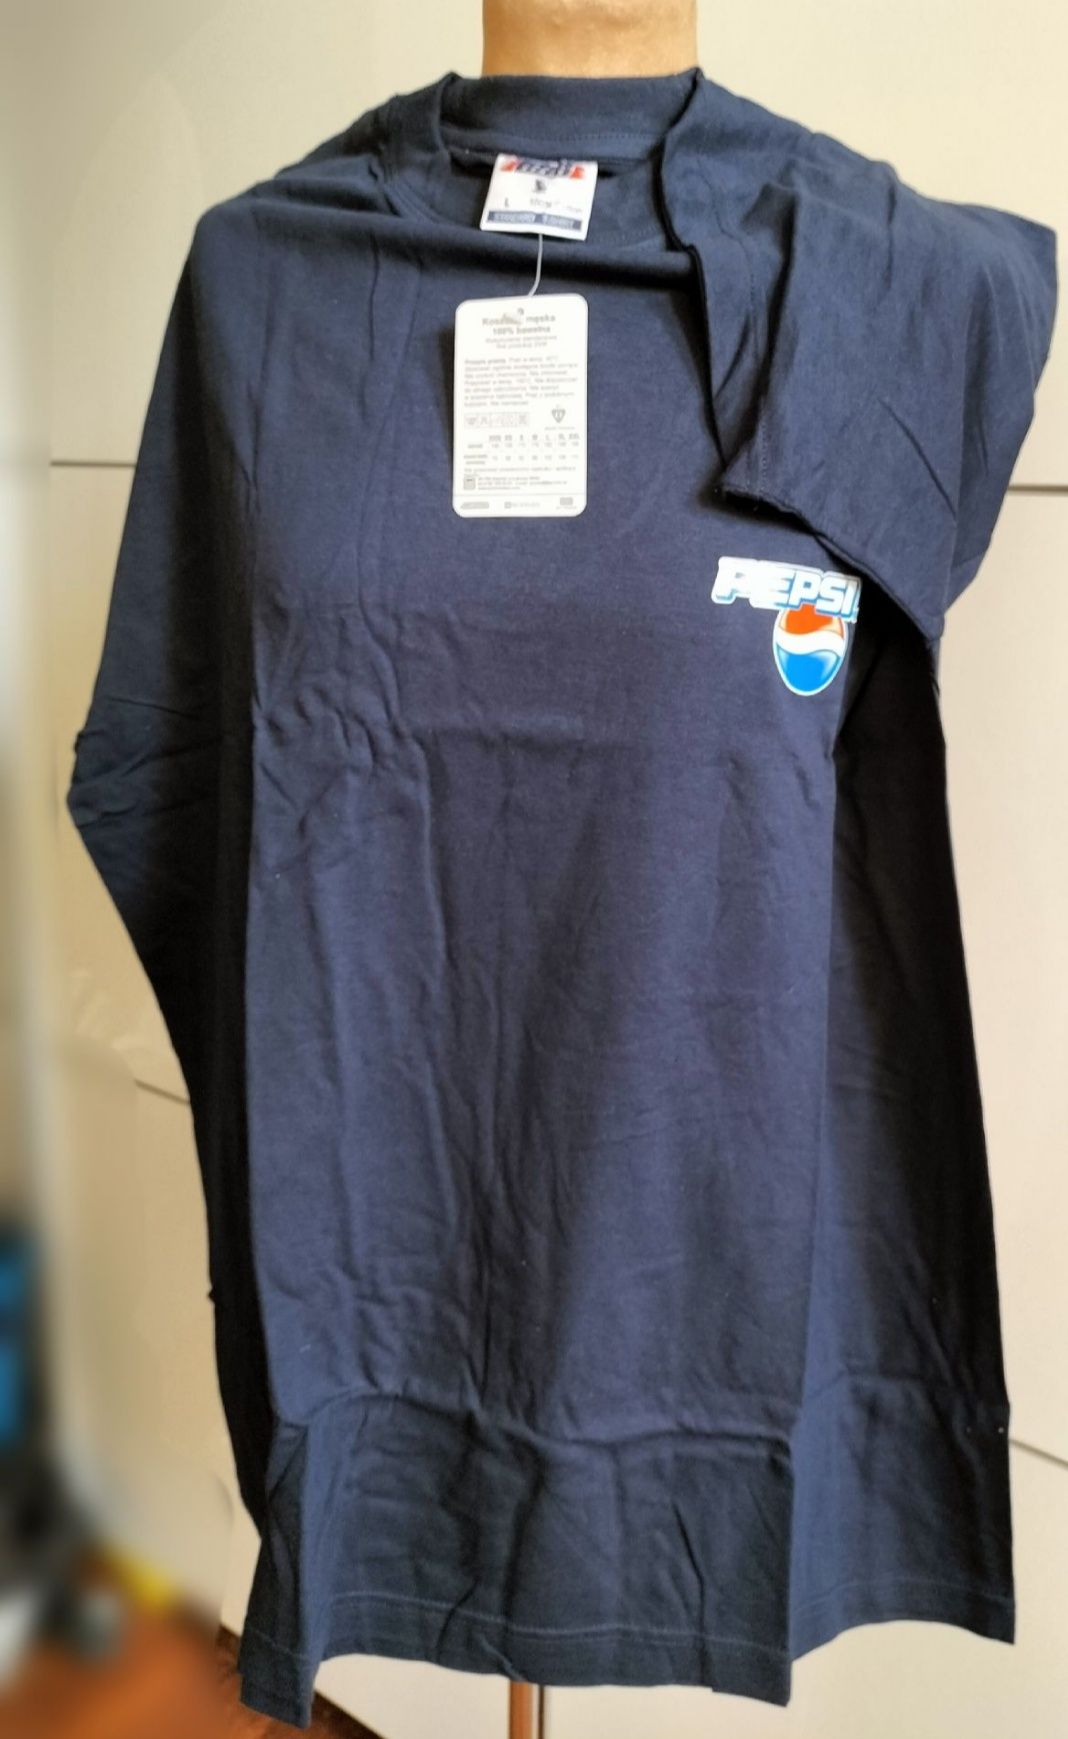 Pepsi T-shirt męski granat koszulka krótki rękaw r.L kolekcjonerskie